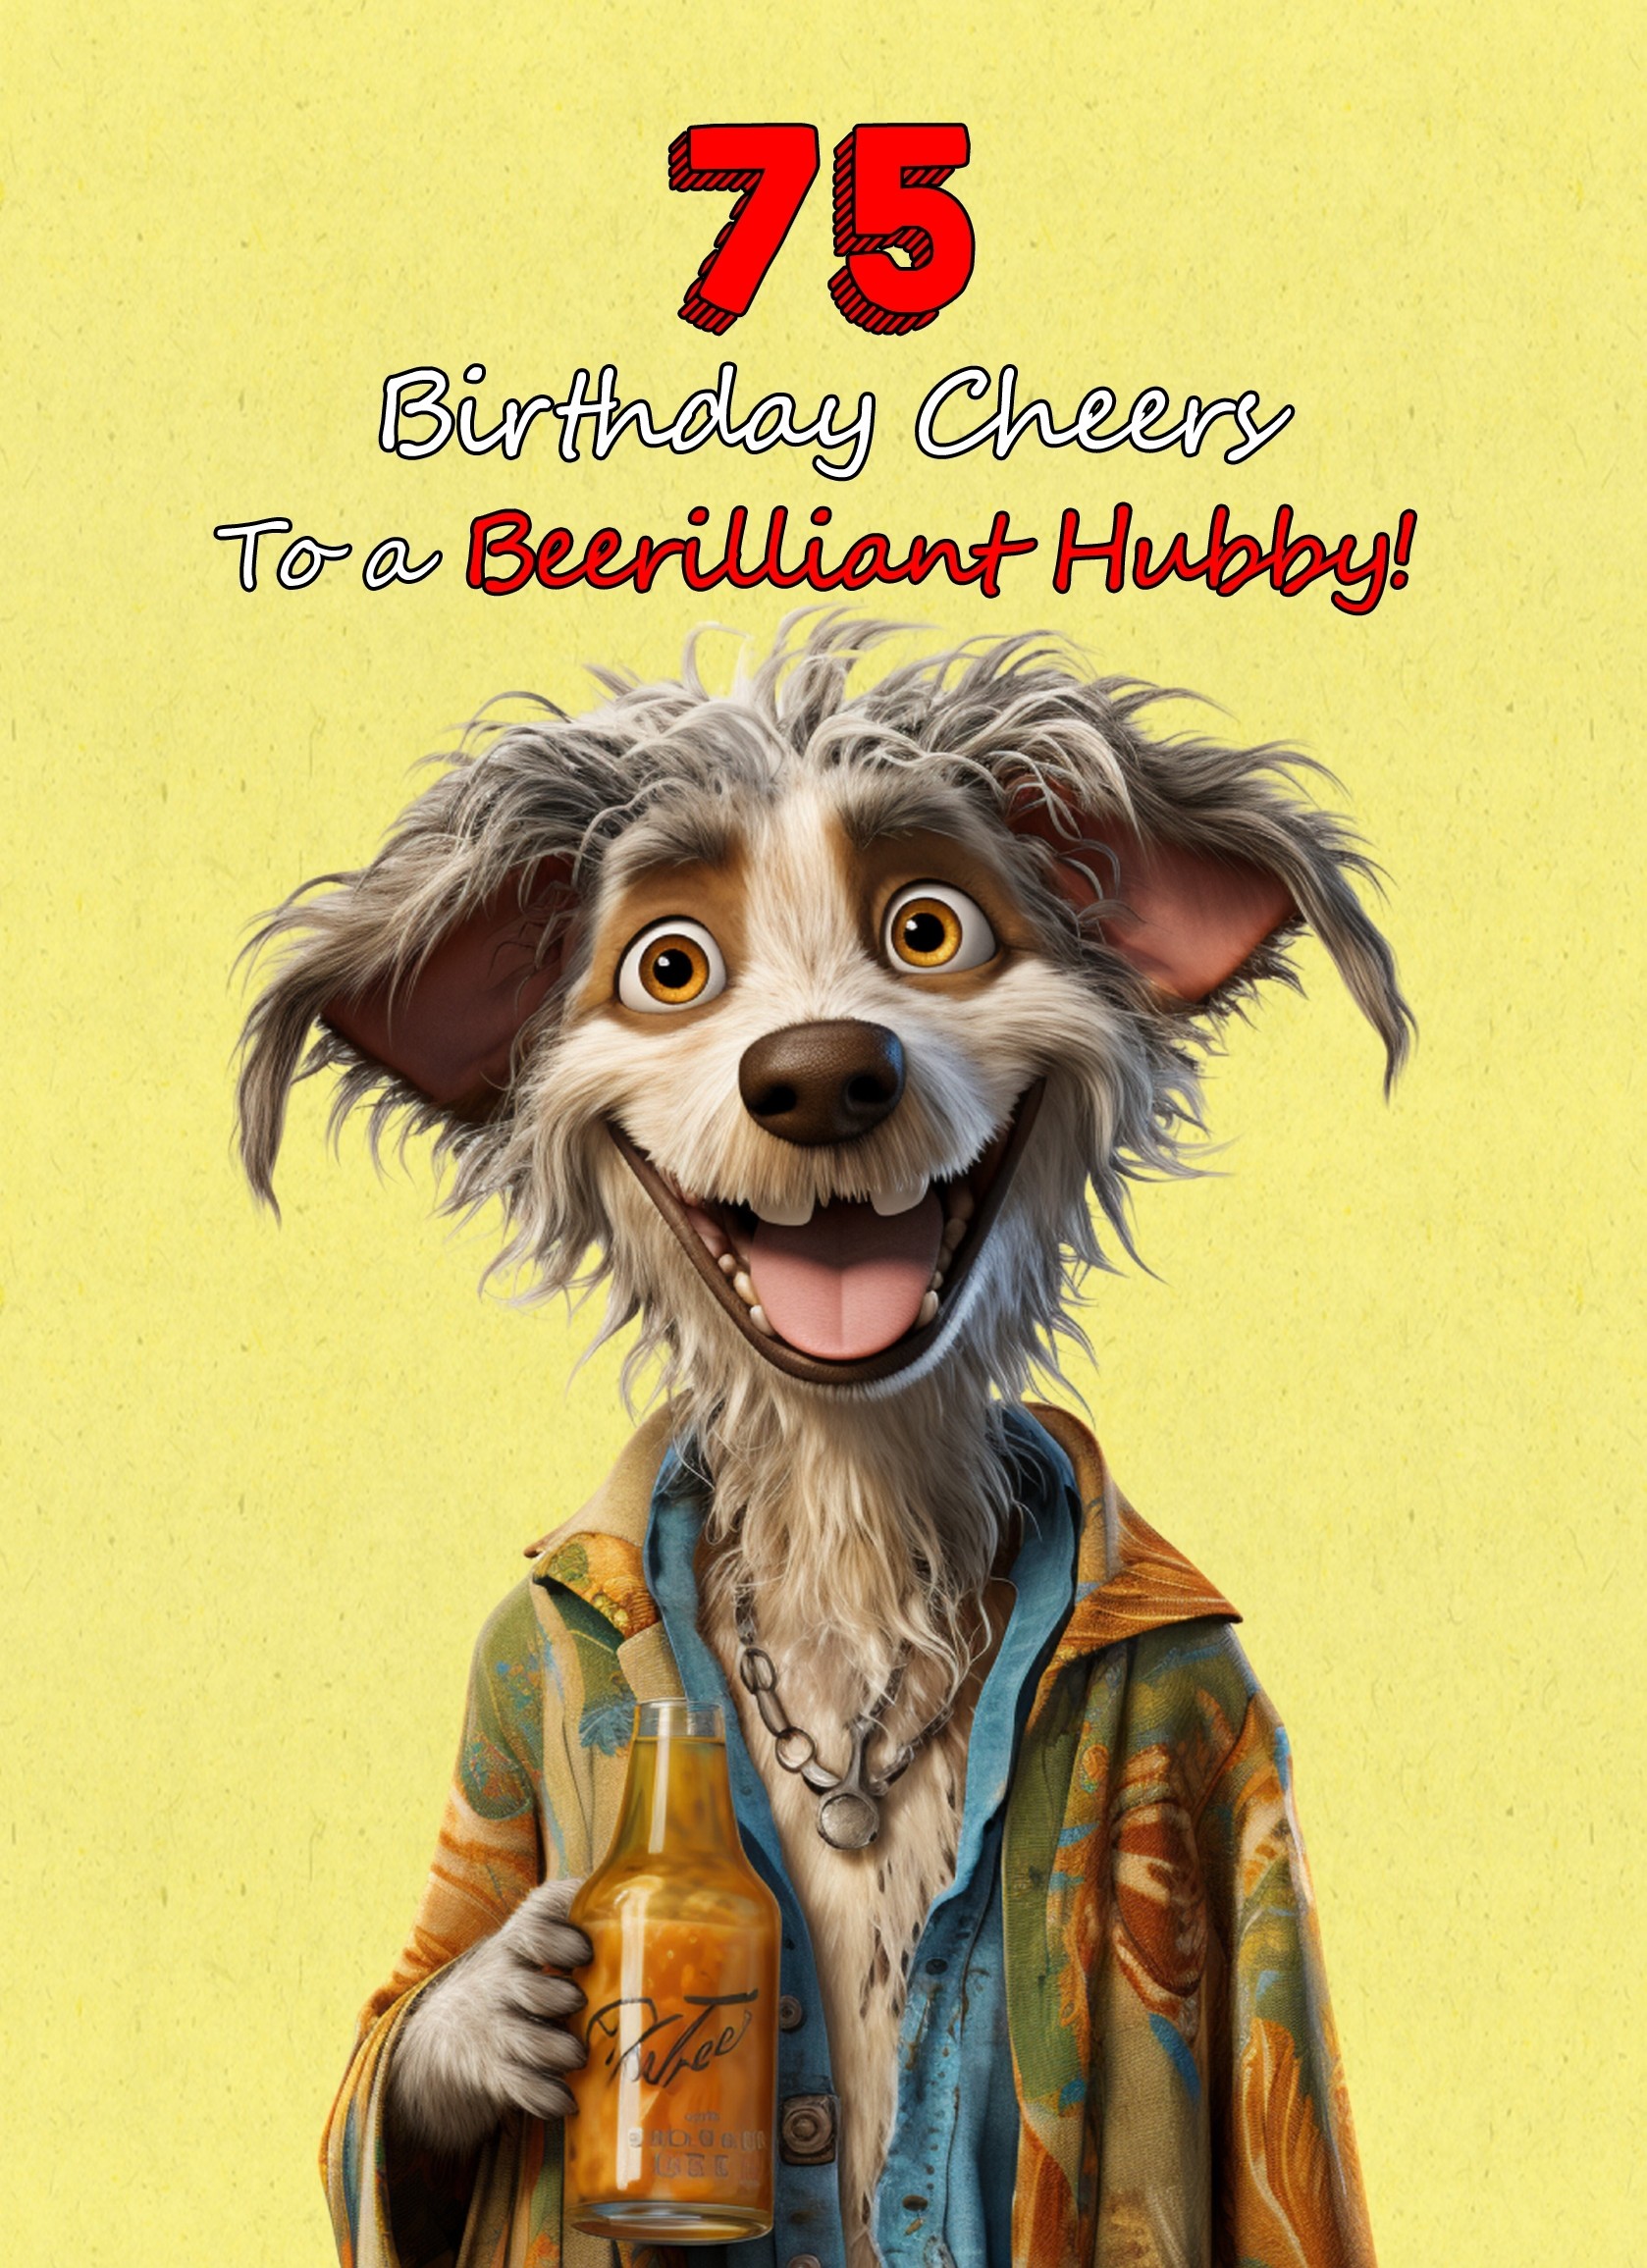 Hubby 75th Birthday Card (Funny Beerilliant Birthday Cheers, Design 2)